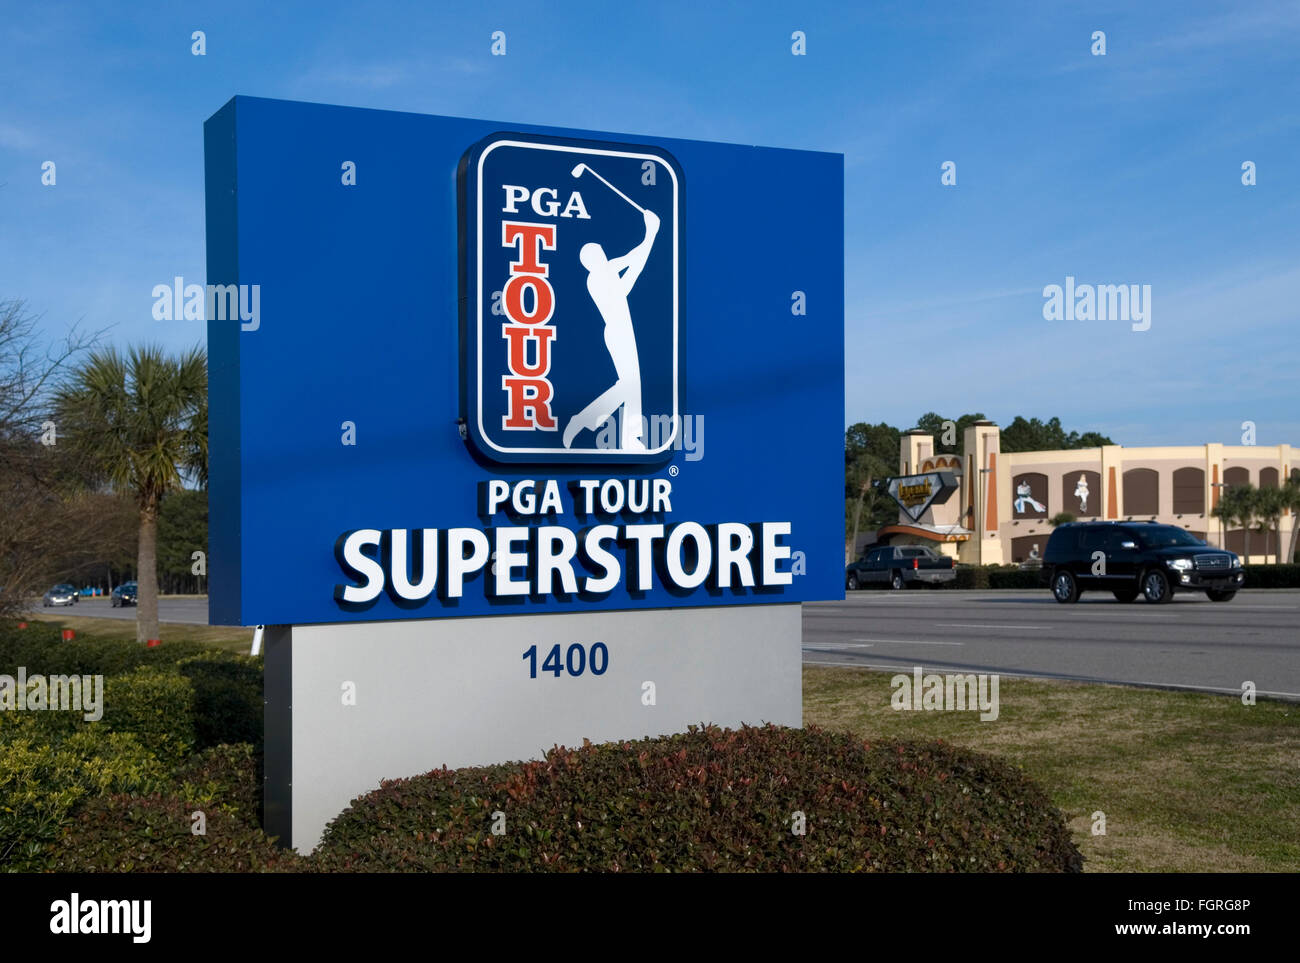 PGA Tour Superstore sign Myrtle Beach South Carolina USA Stock Photo